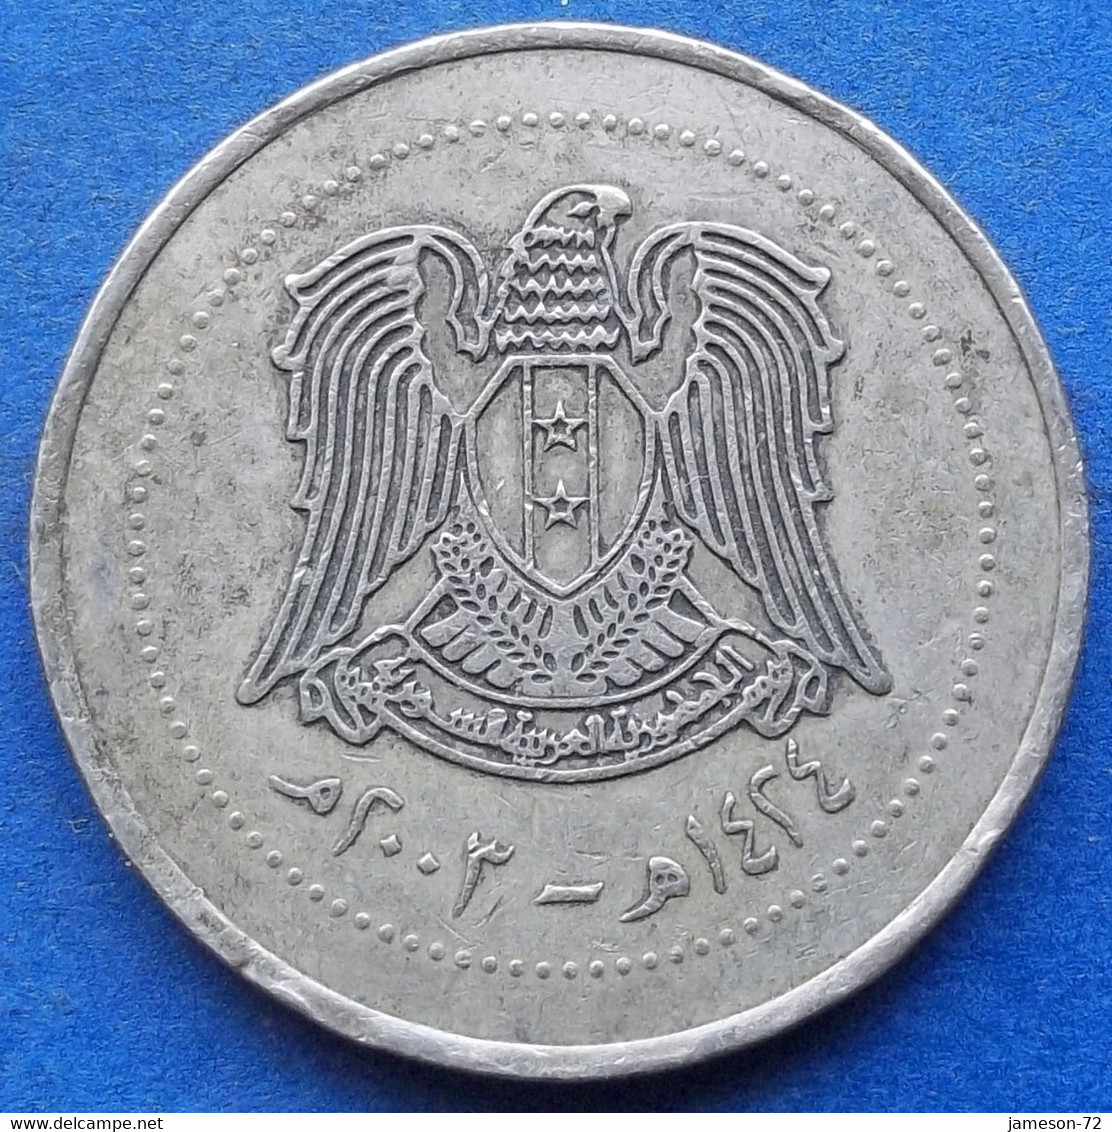 SYRIA - 10 Pounds AH1424 2003AD KM# 130 Arab Republic (1961) - Edelweiss Coins - Syria